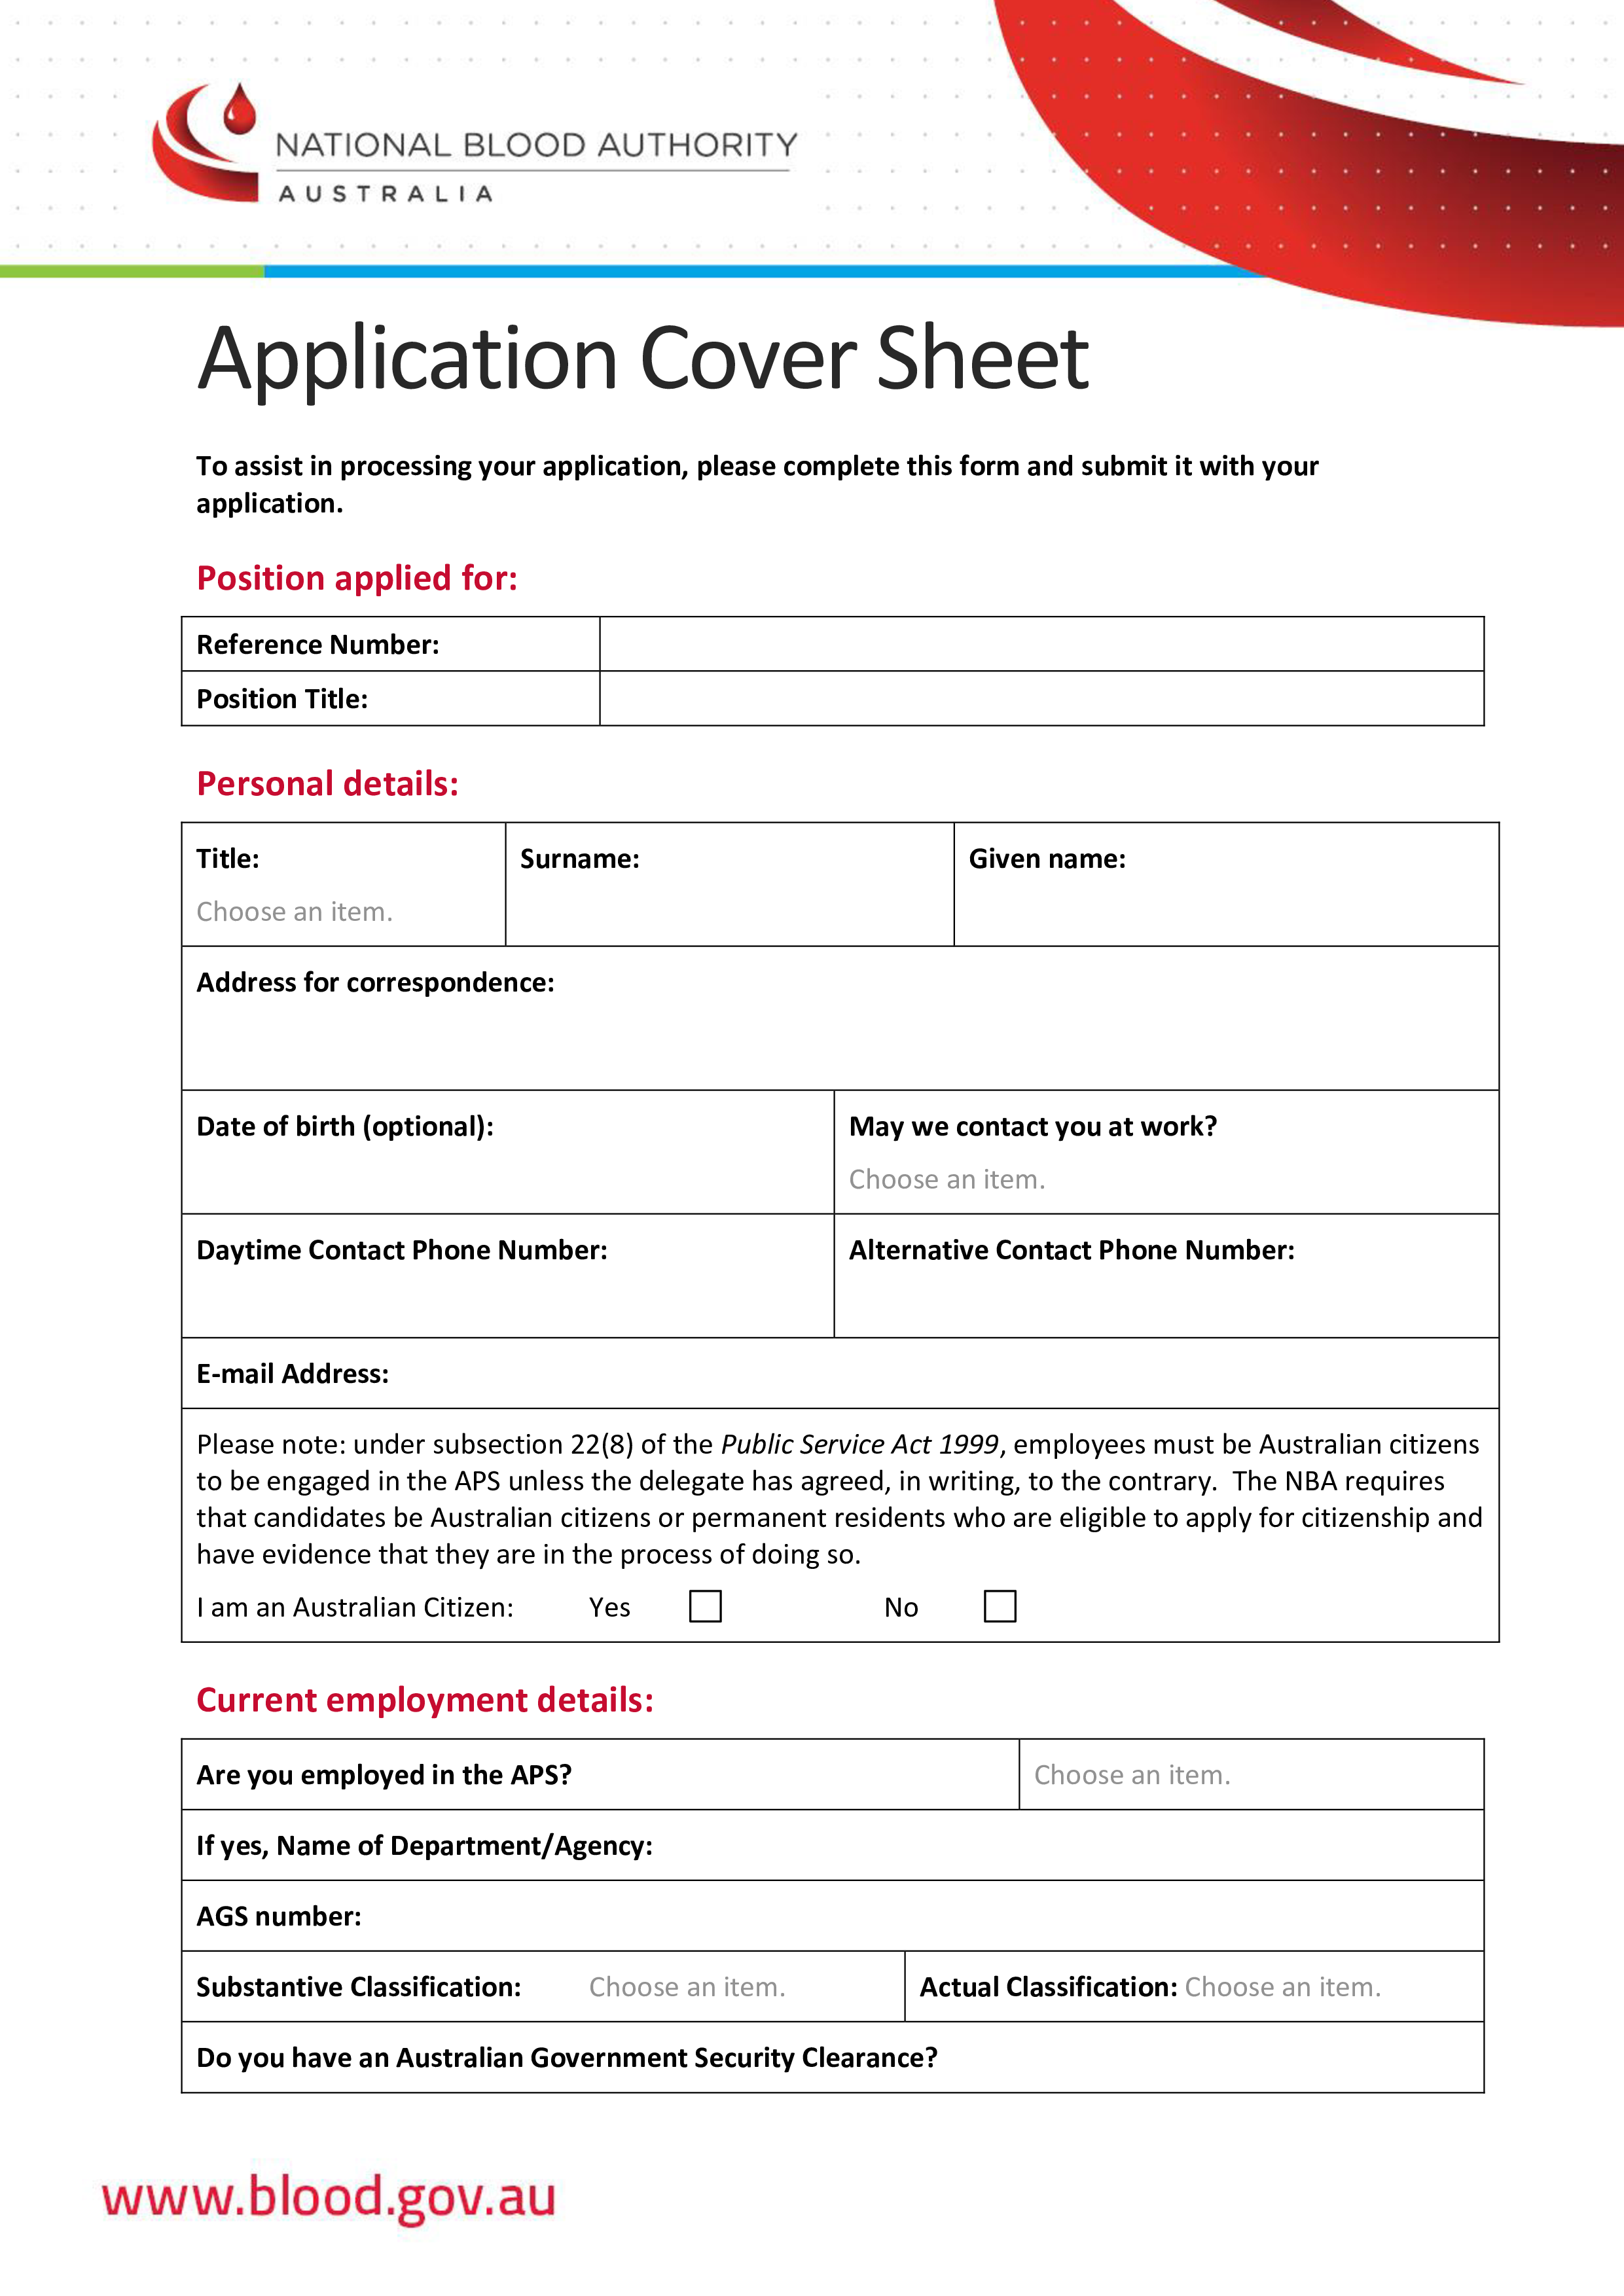 Application Cover Sheet main image